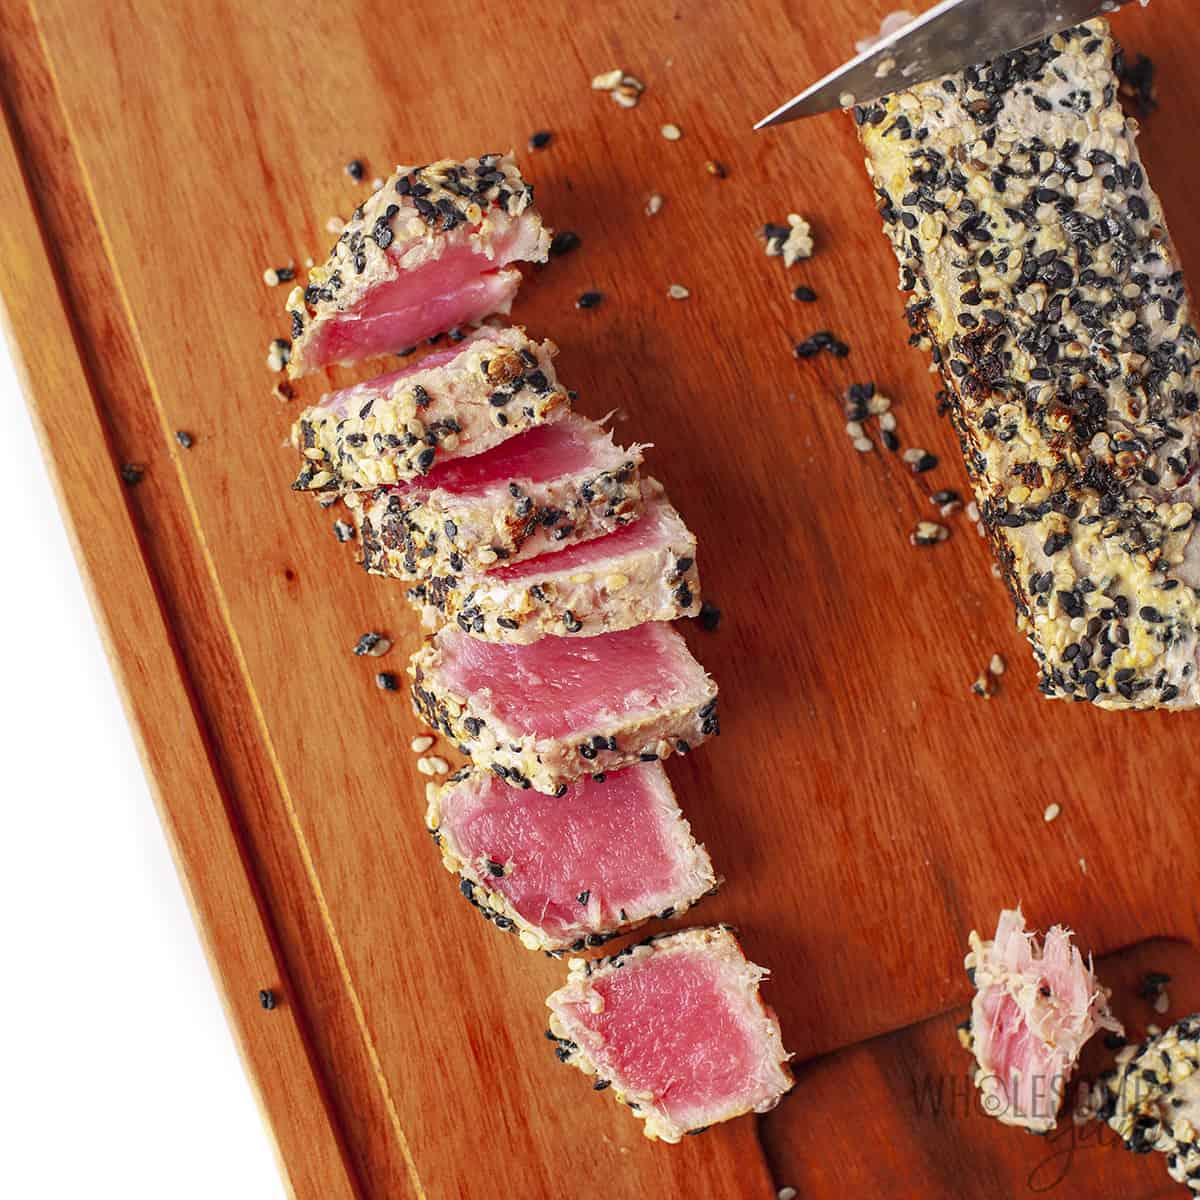 Tuna steak sliced on cutting board.